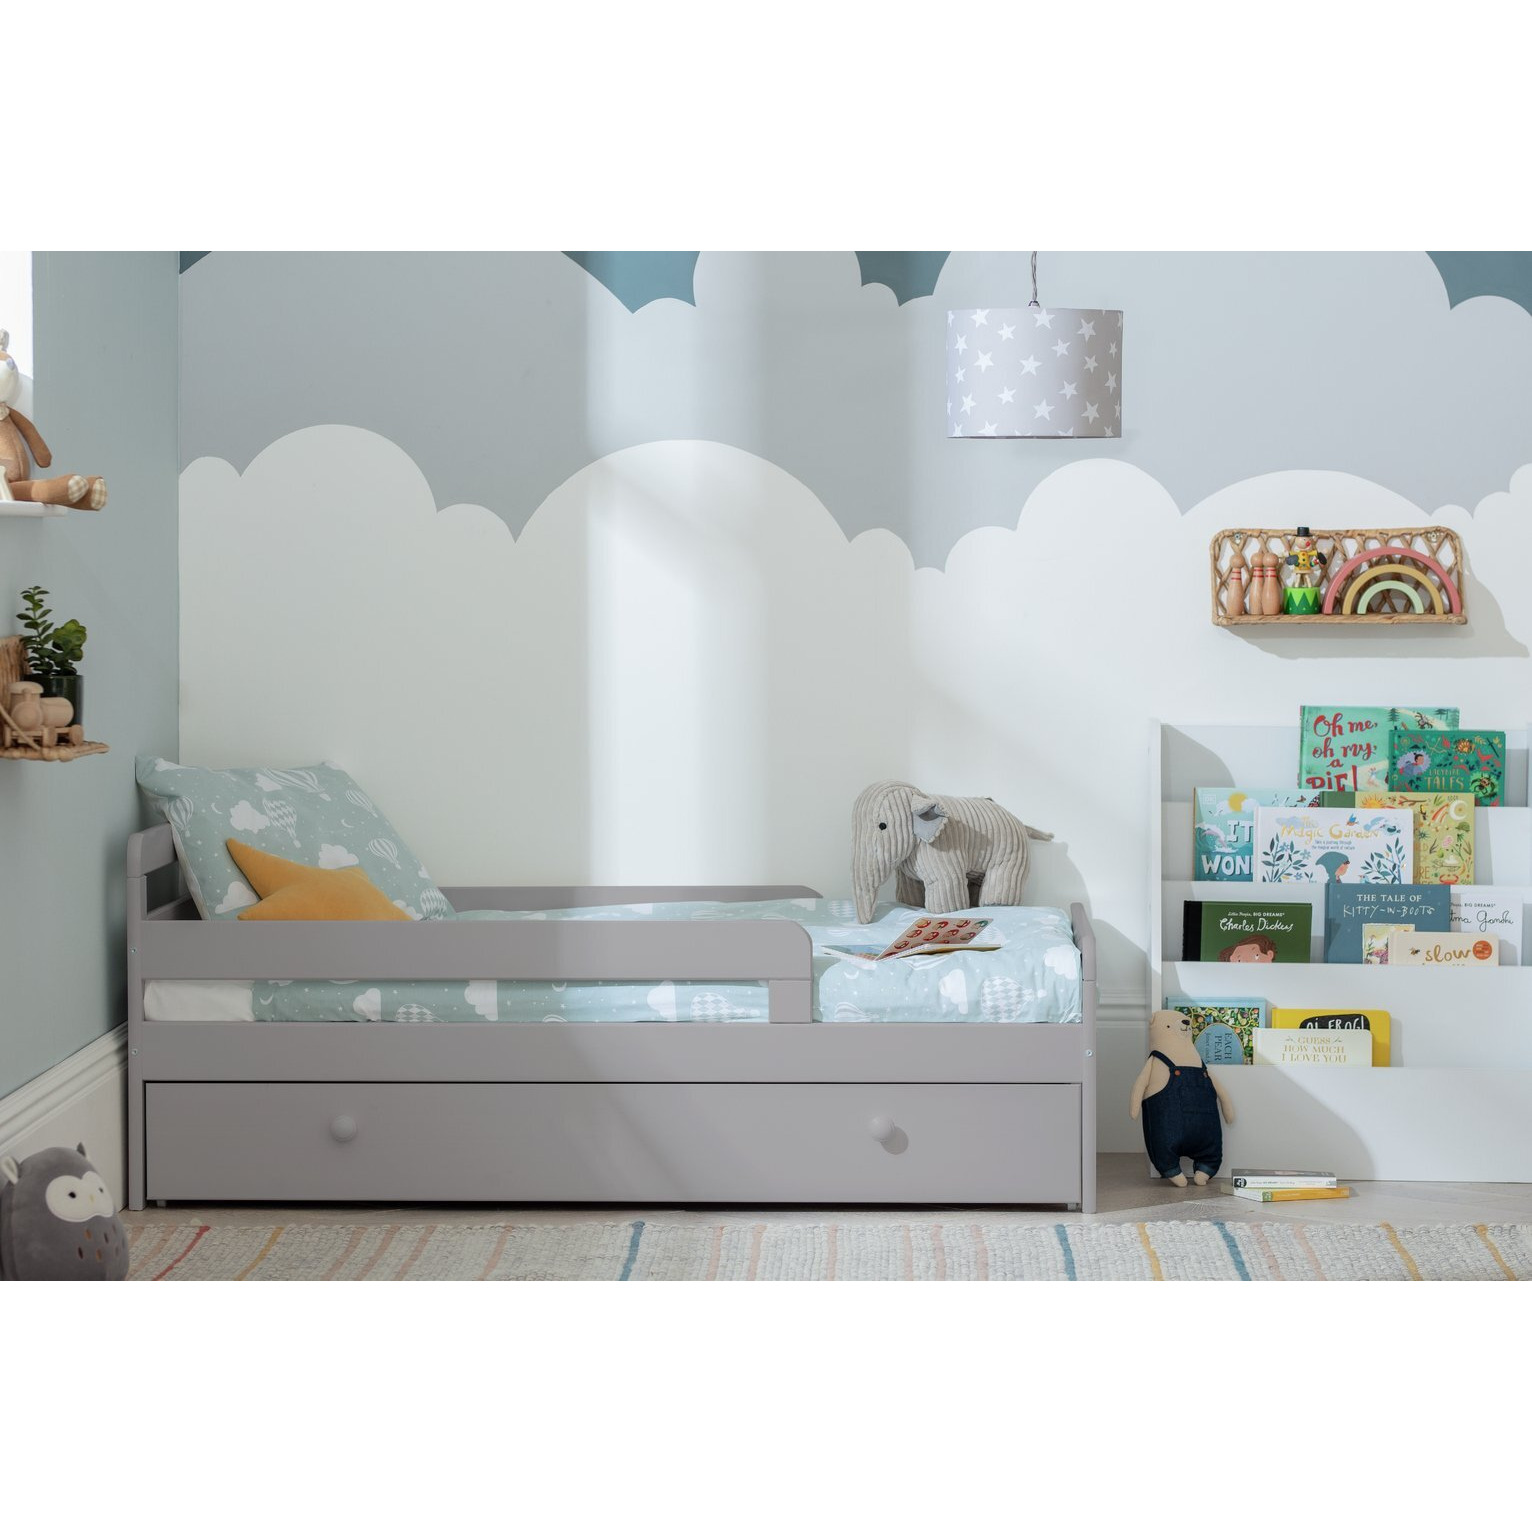 Habitat Ellis Toddler Bed Frame with Drawer - Grey - image 1